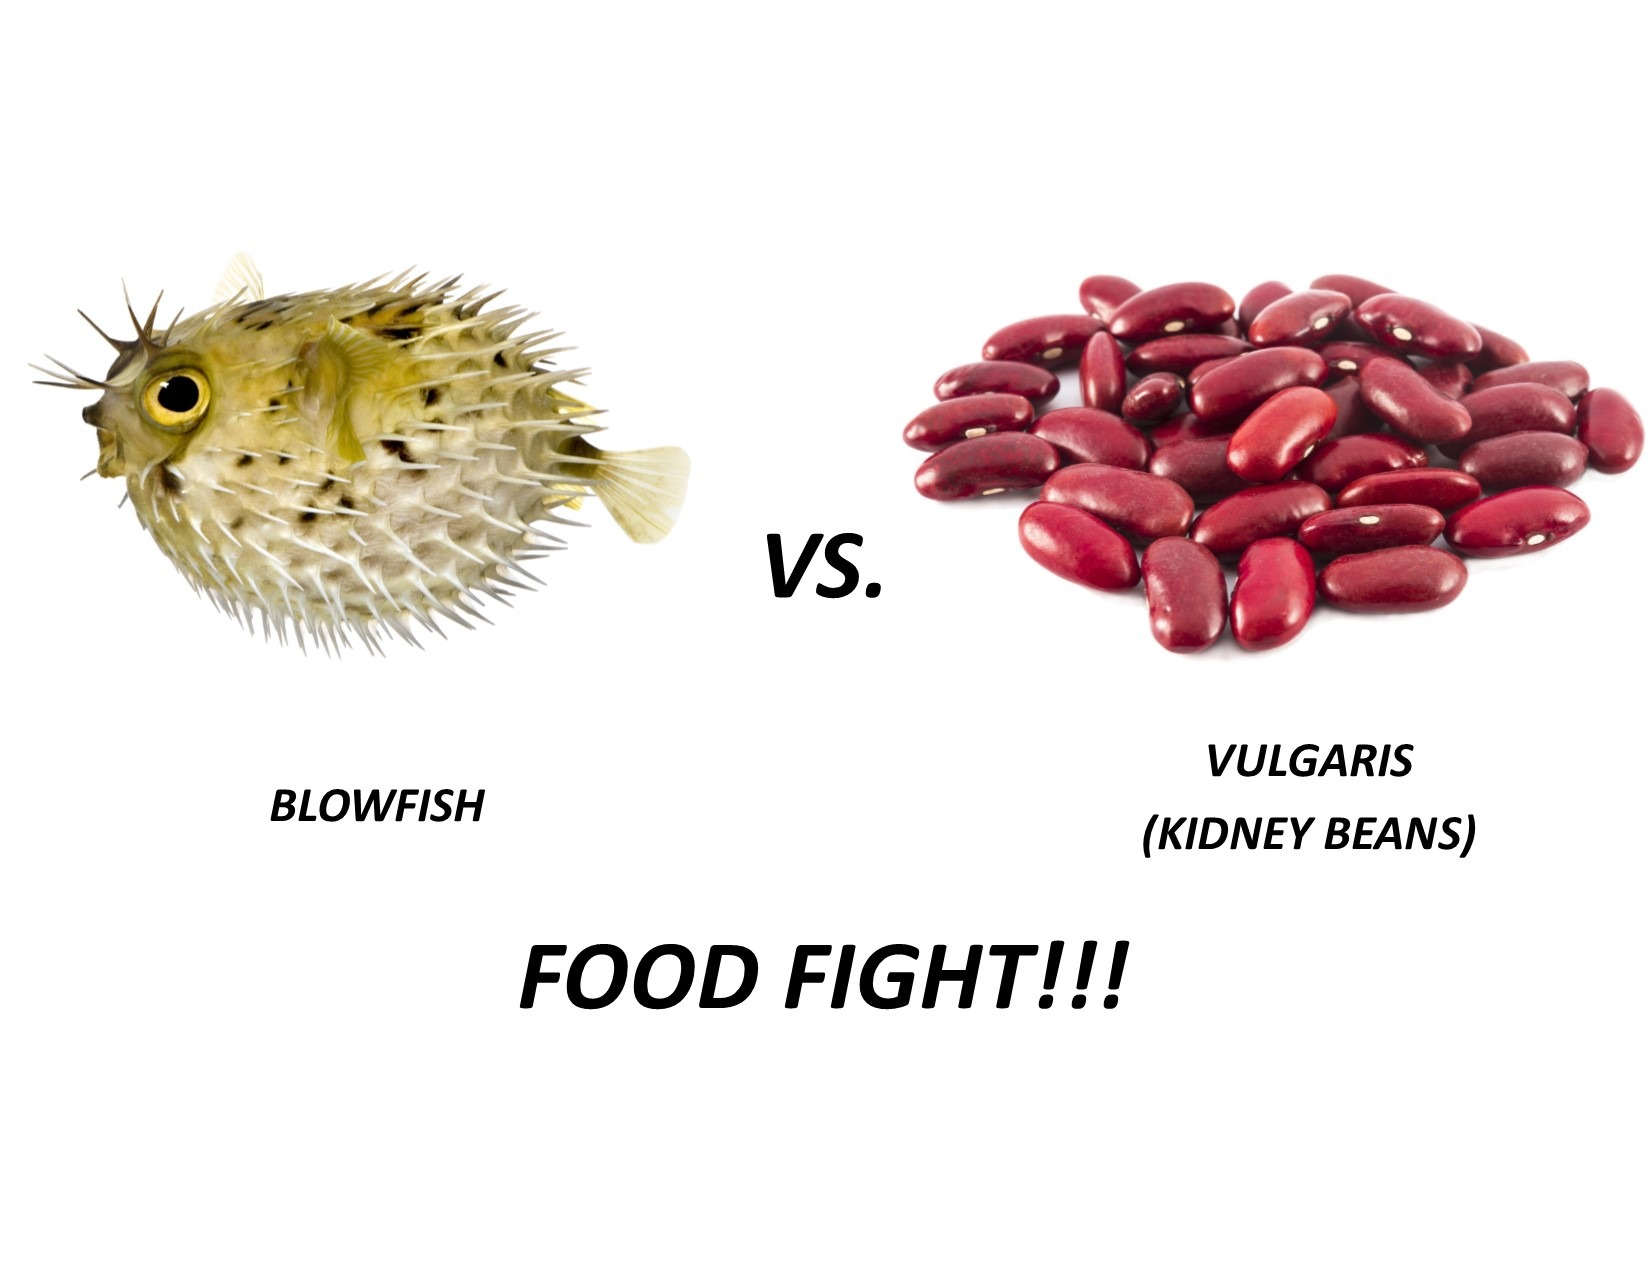 Blowfish vs Kidney